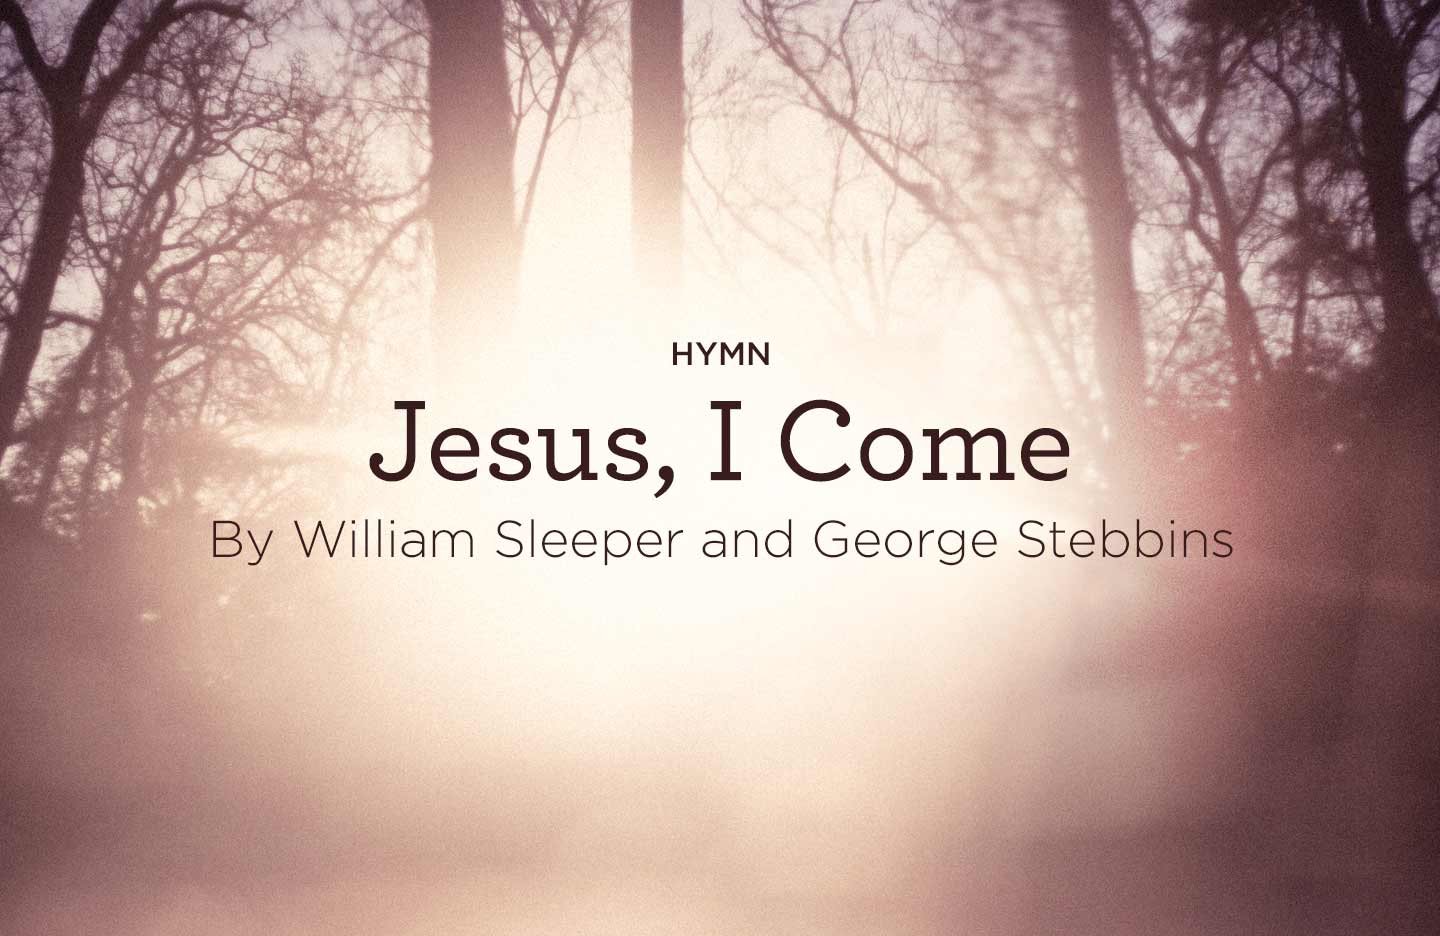 Hymn: "Jesus, I Come" by William Sleeper and George Stebbins